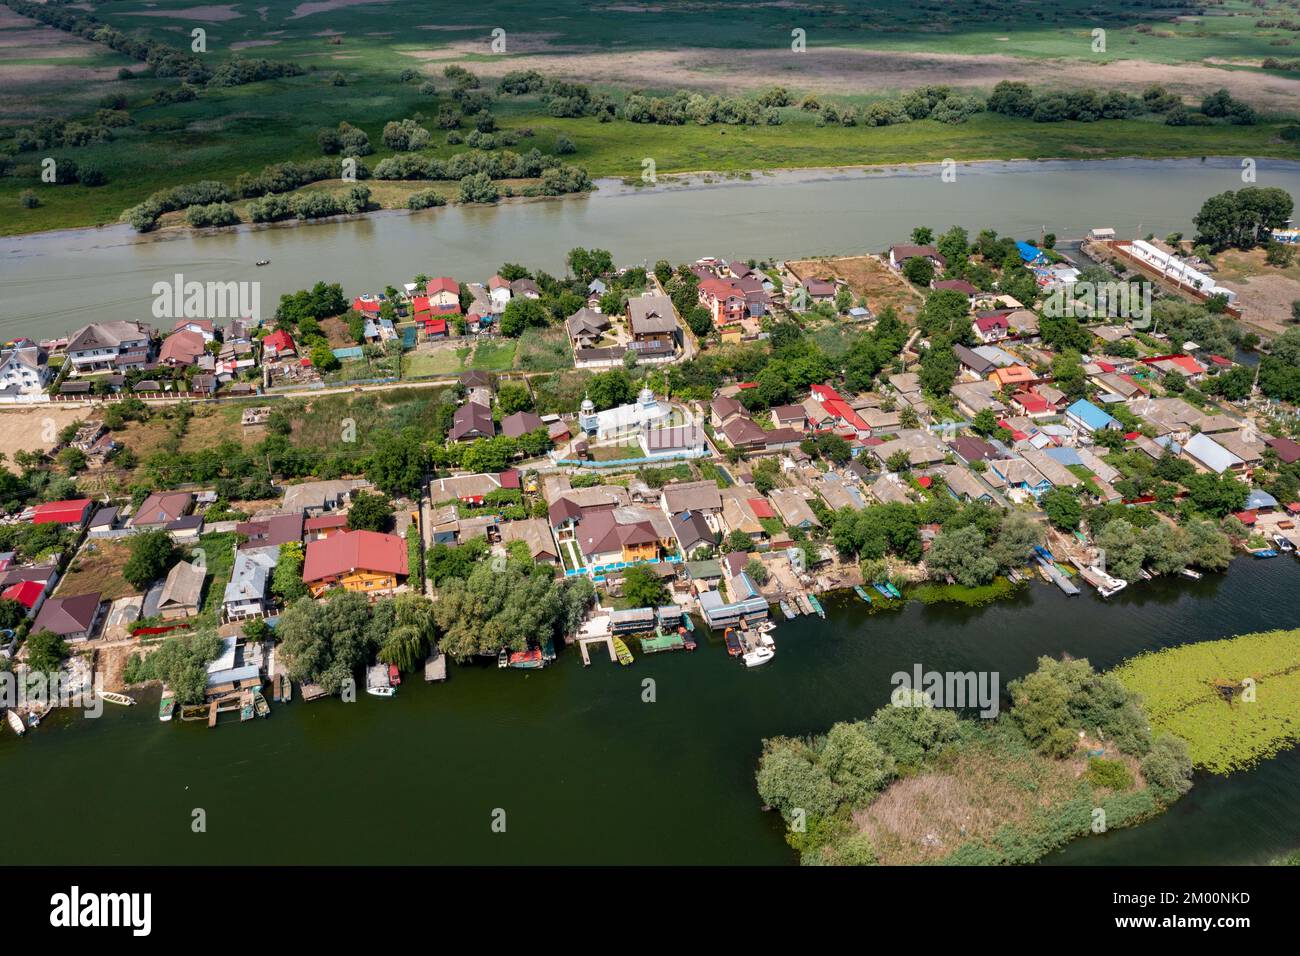 The village of Mila 23 in the Danube Delta in Romania Stock Photo